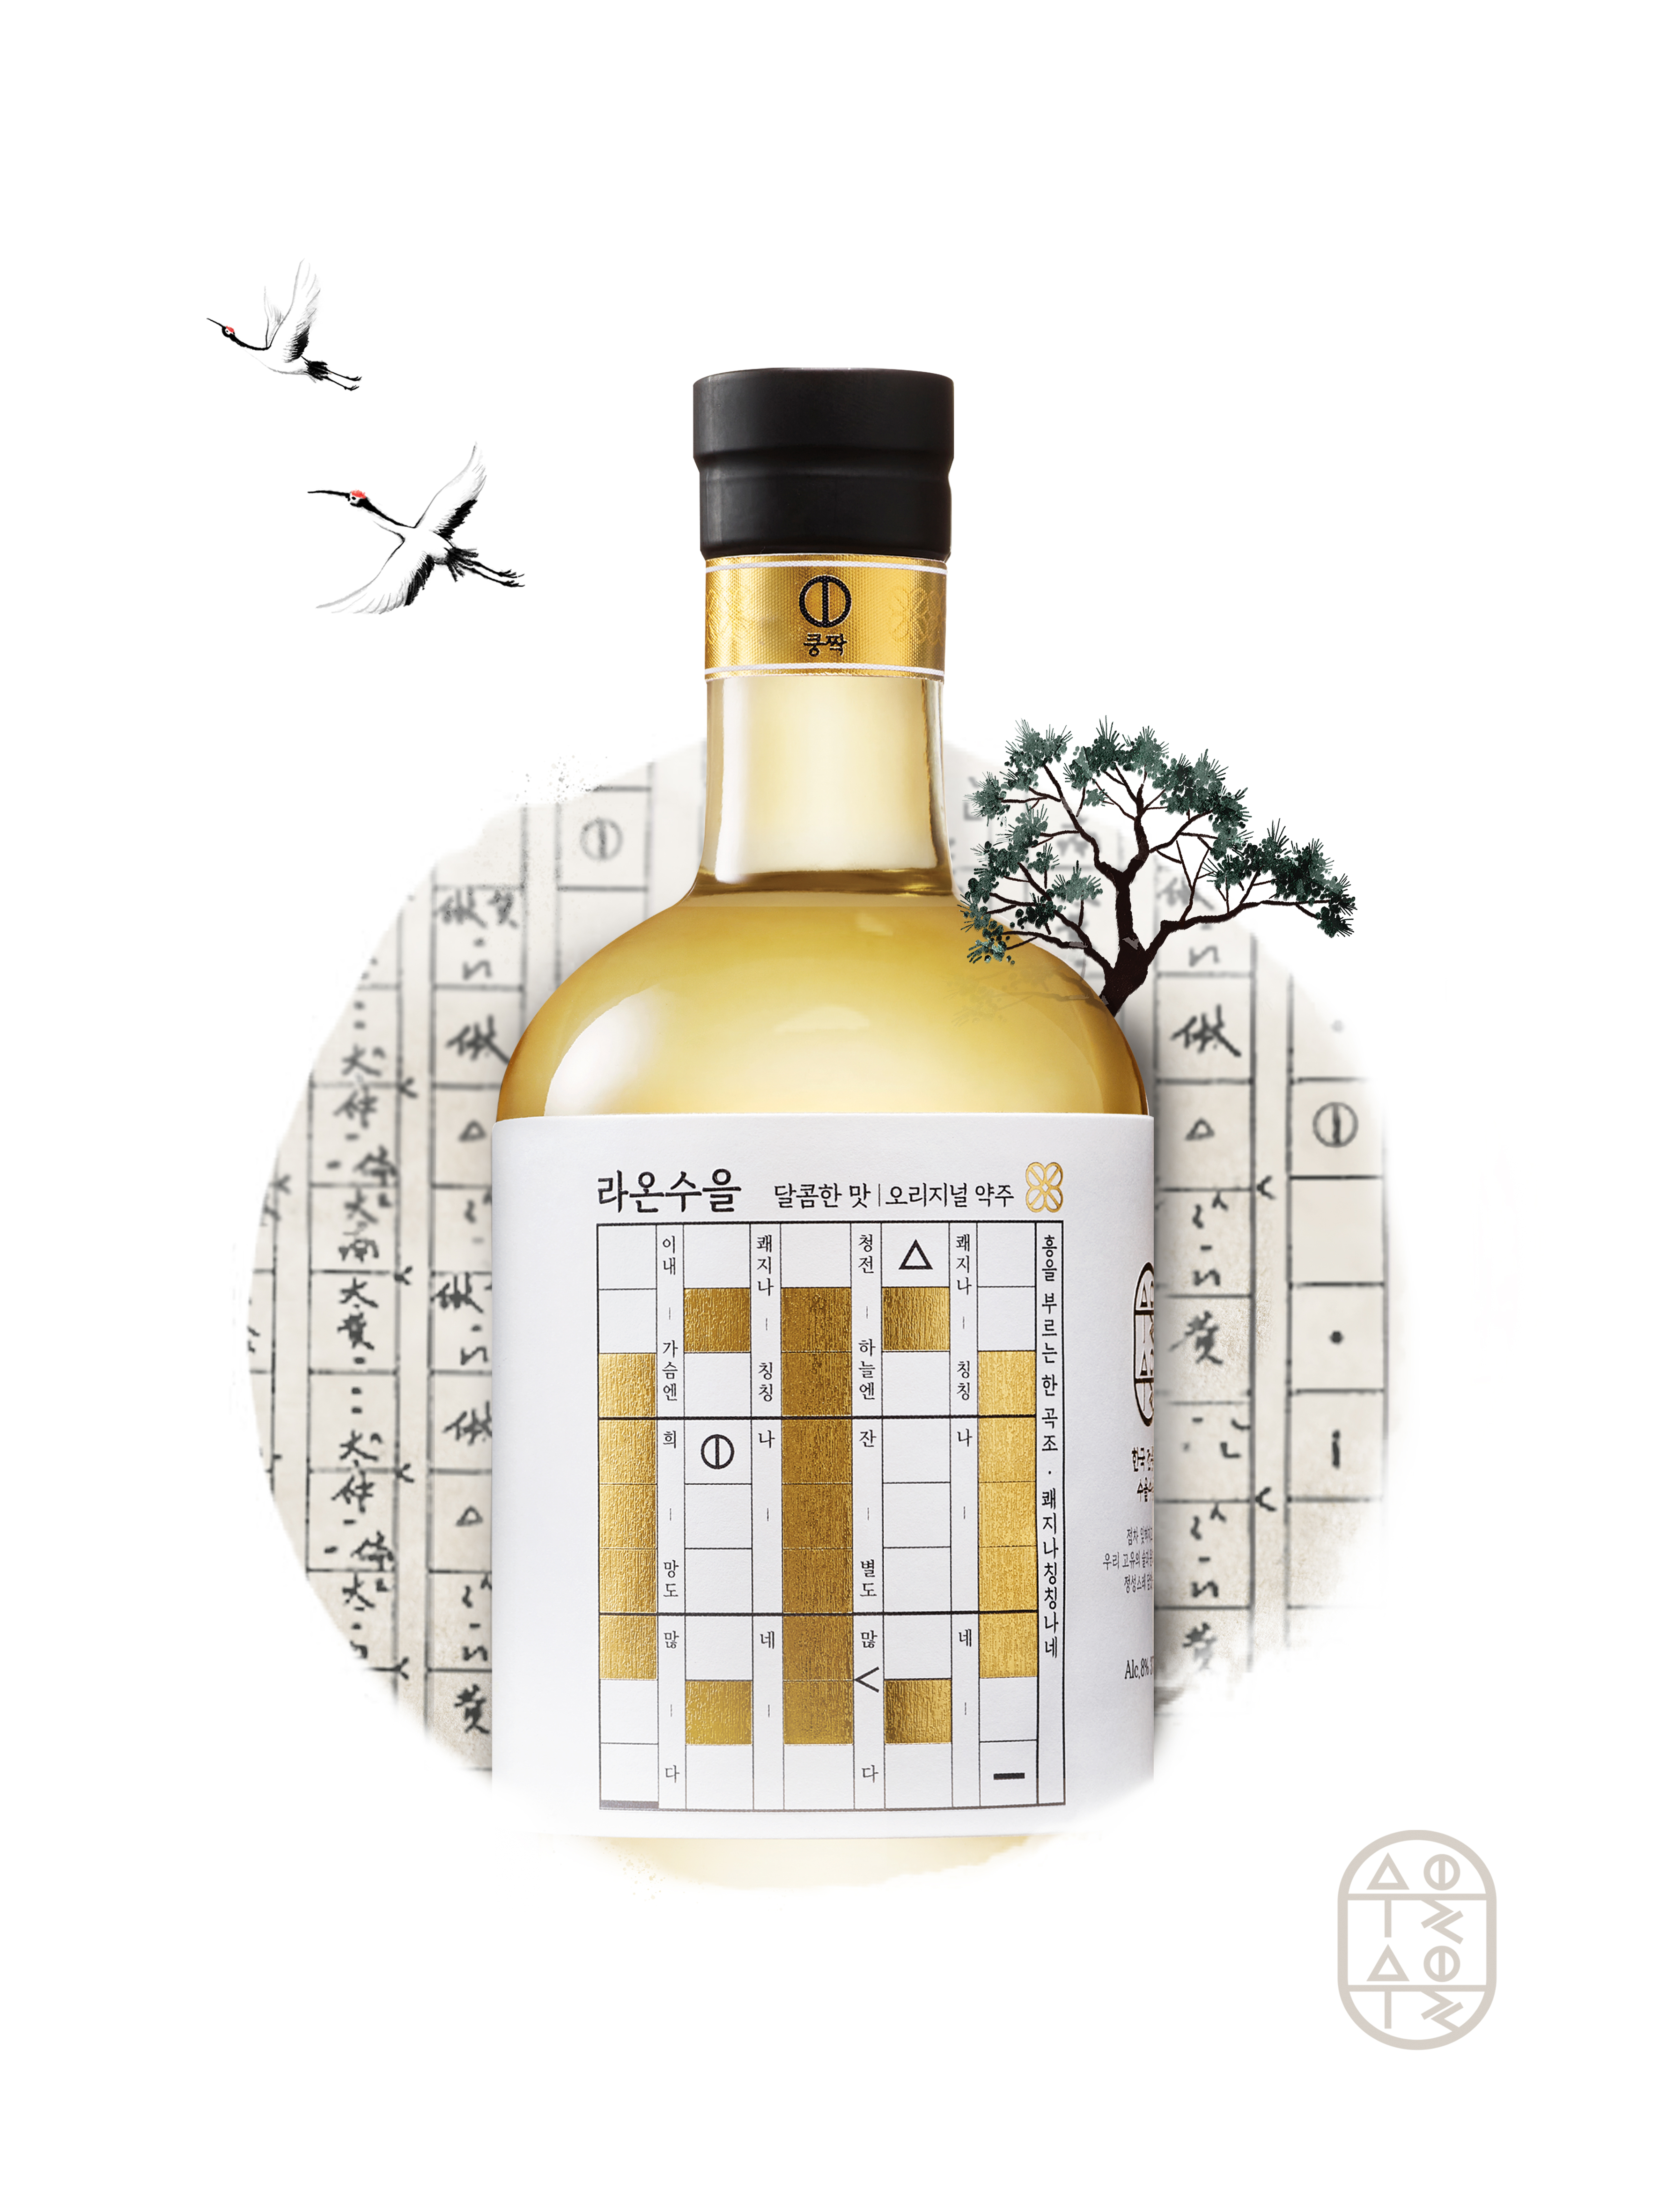 Korean traditional liquor brand SoolSool